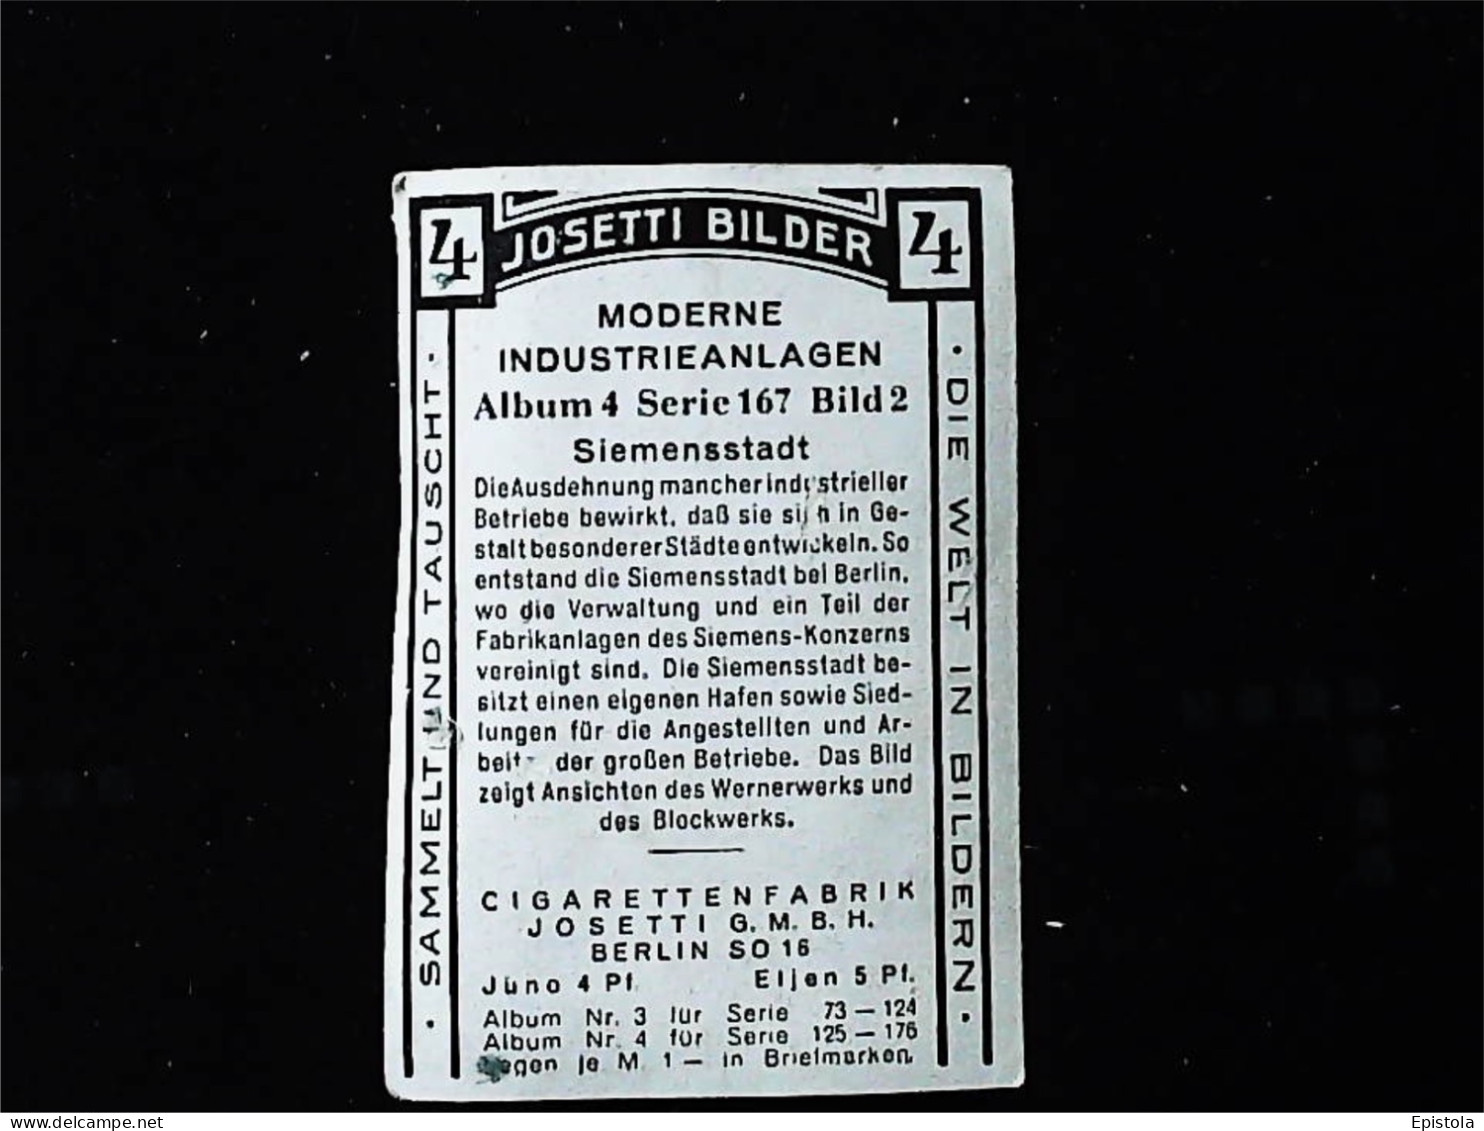 ► Siemens A.G. Berlin Usines  - Chromo-Image Cigarette Josetti Bilder Berlin Album 4 1920's - Other Brands